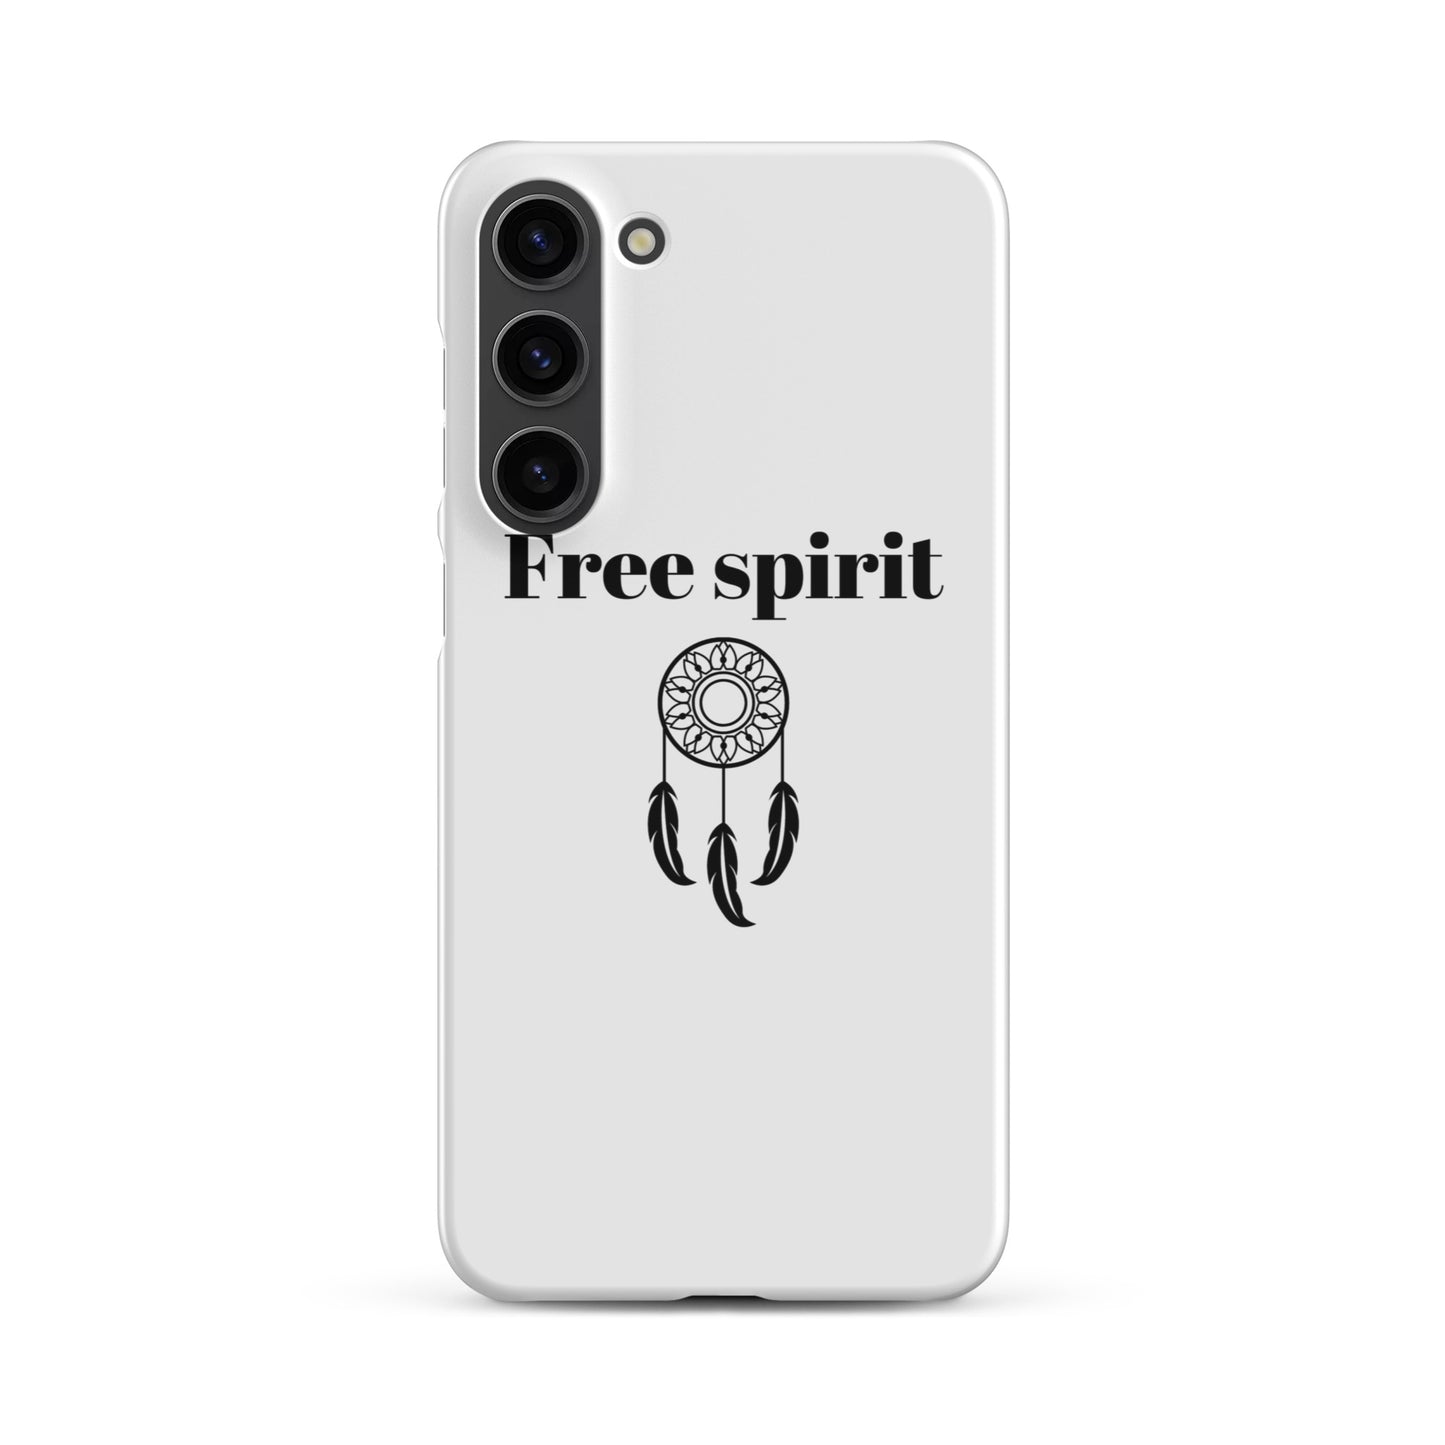 Snap case for Samsung® free spirit